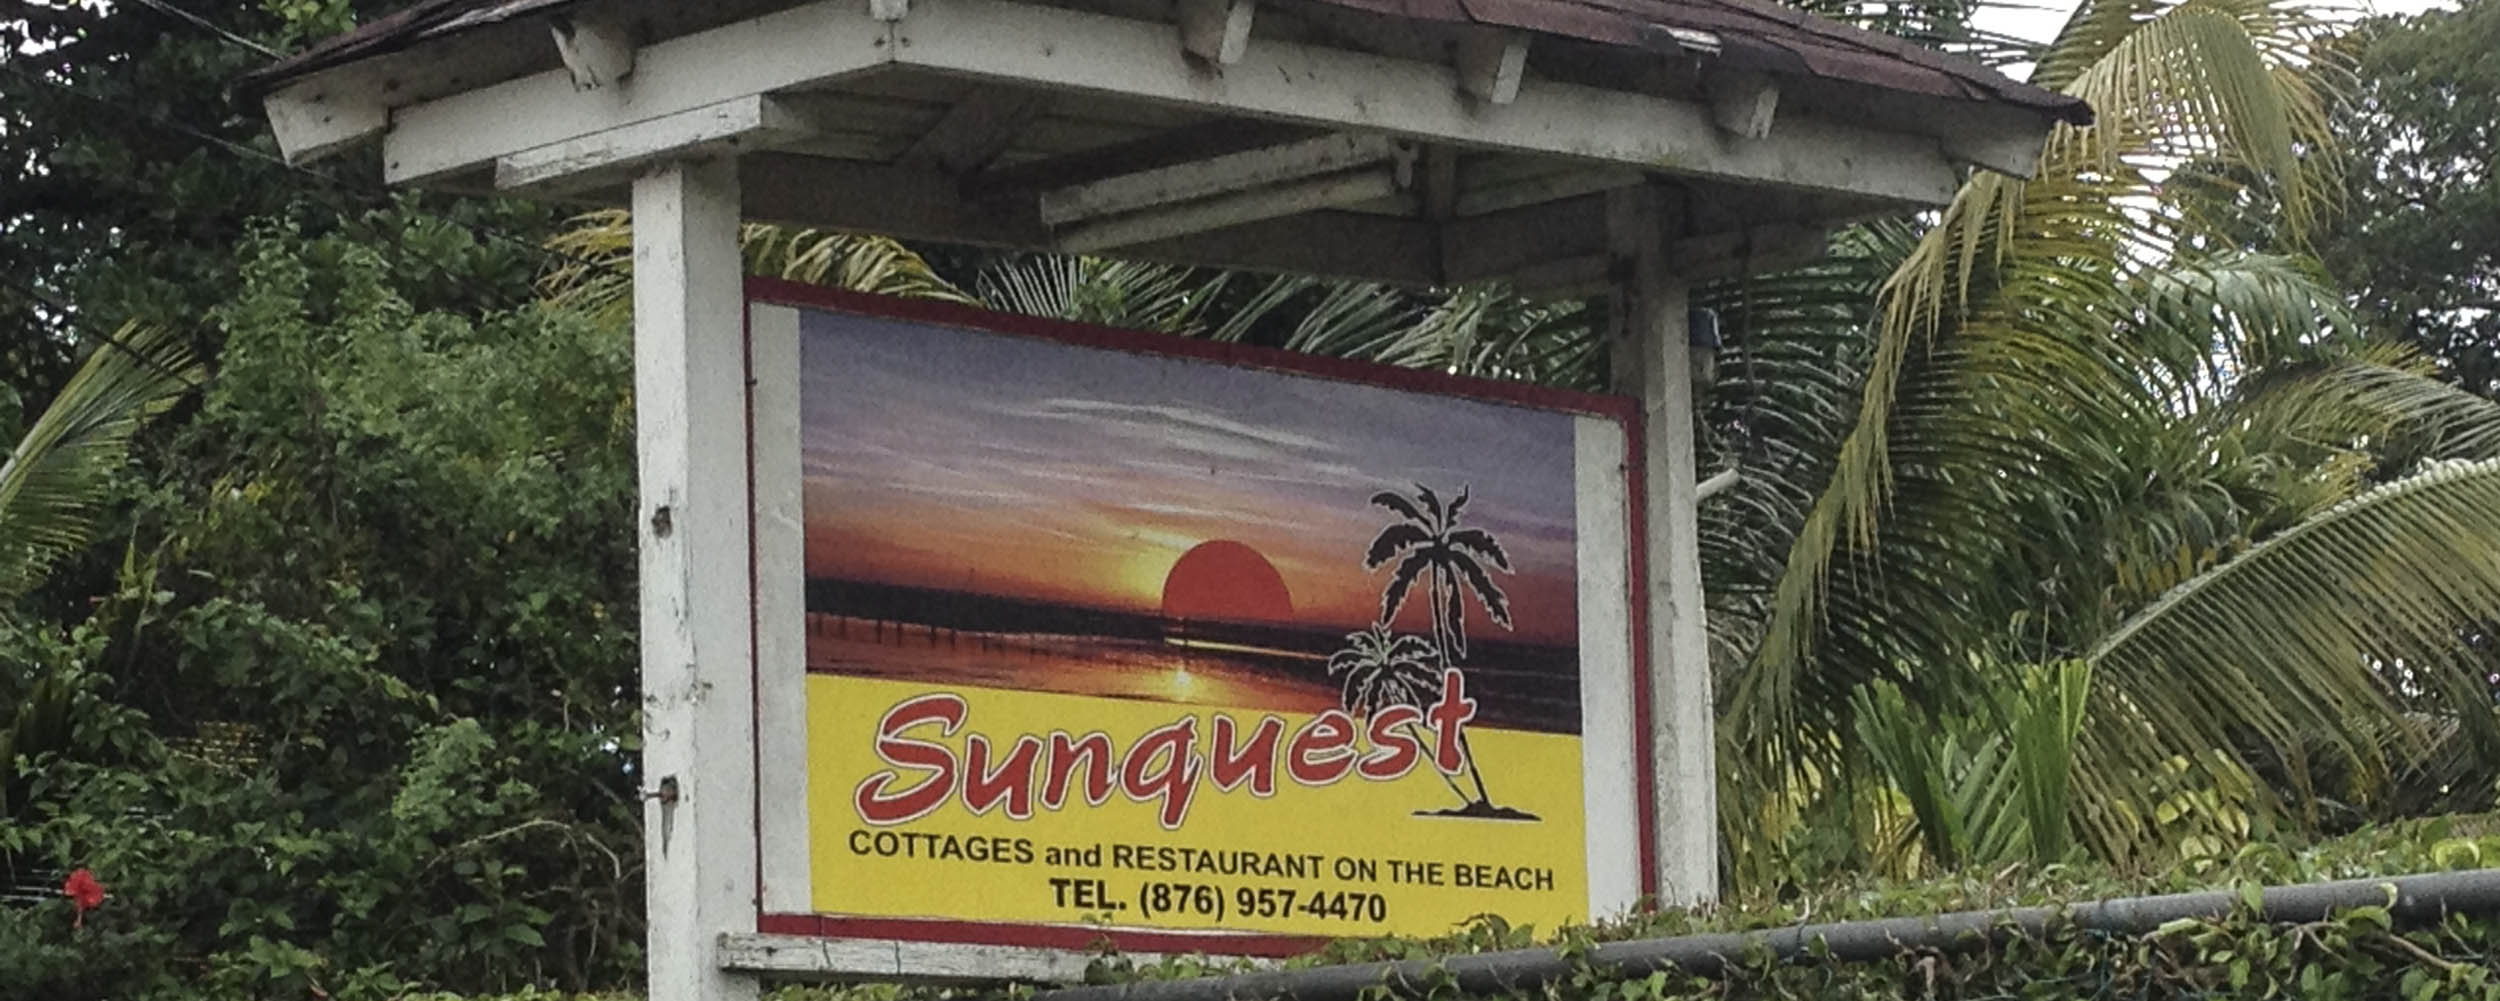 Sunquest Cottages - Negril Jamaica